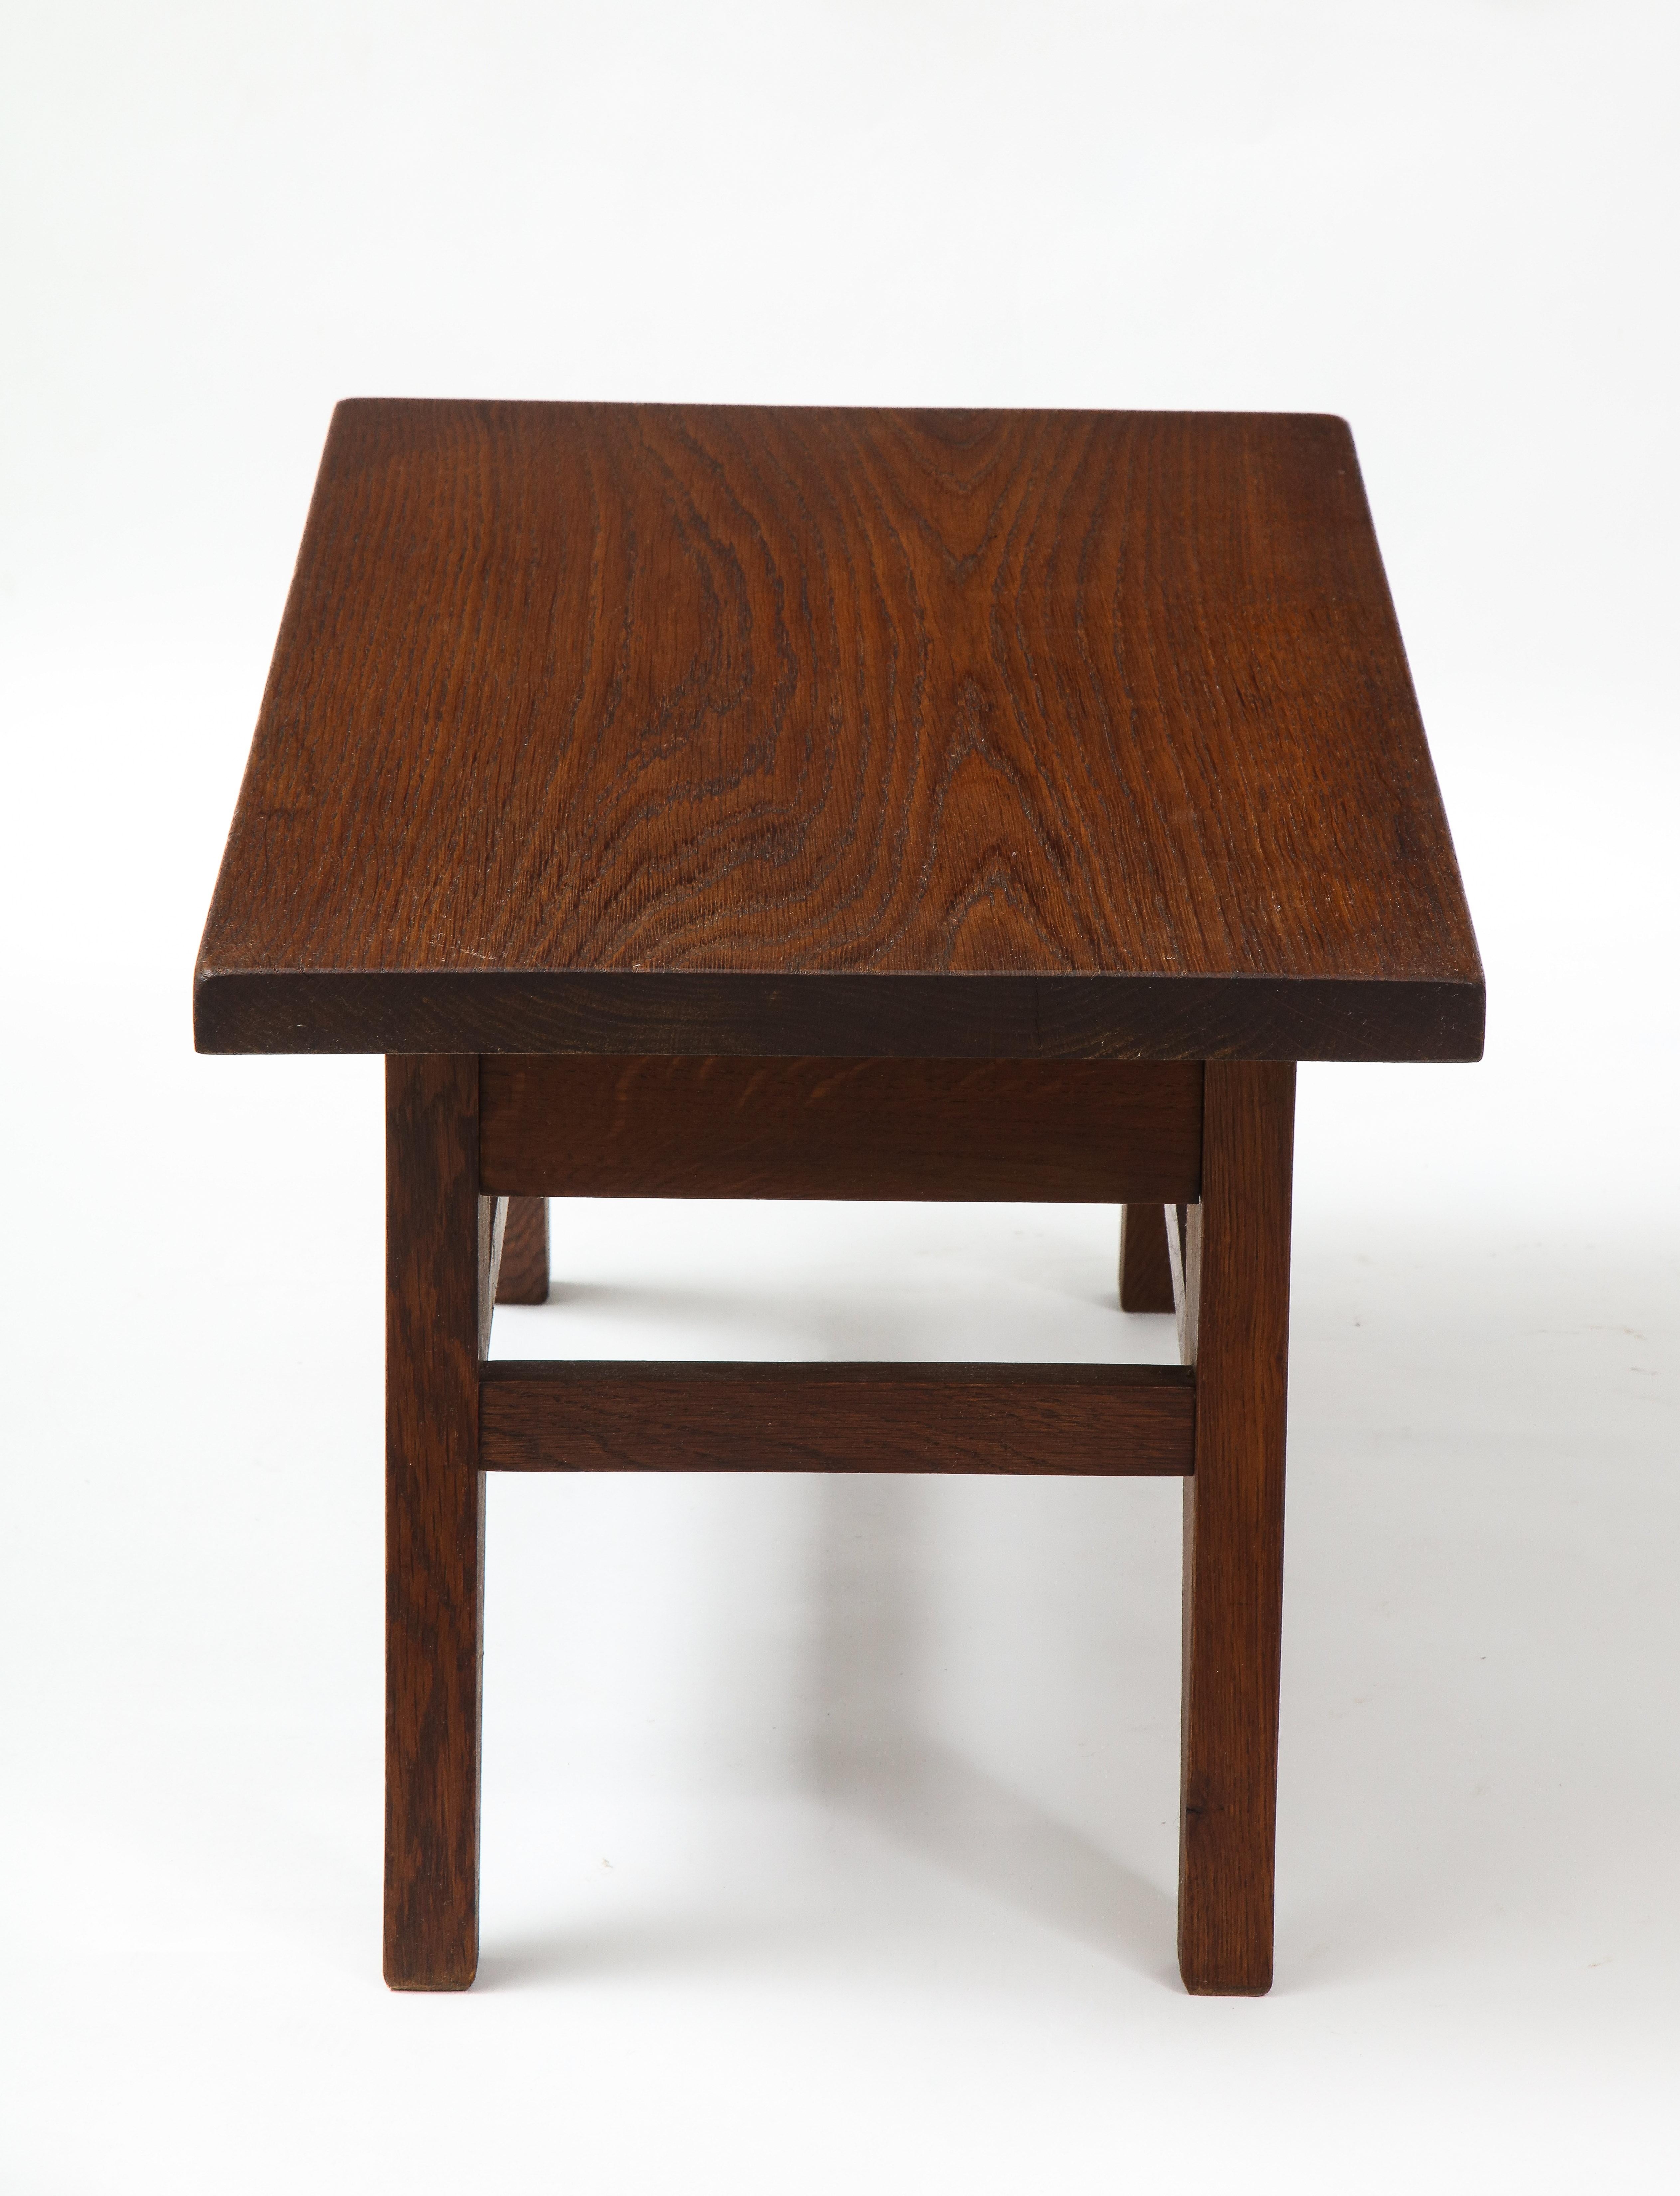 René Gabriel Style Low Table Stool, France, c. 1950-60 1